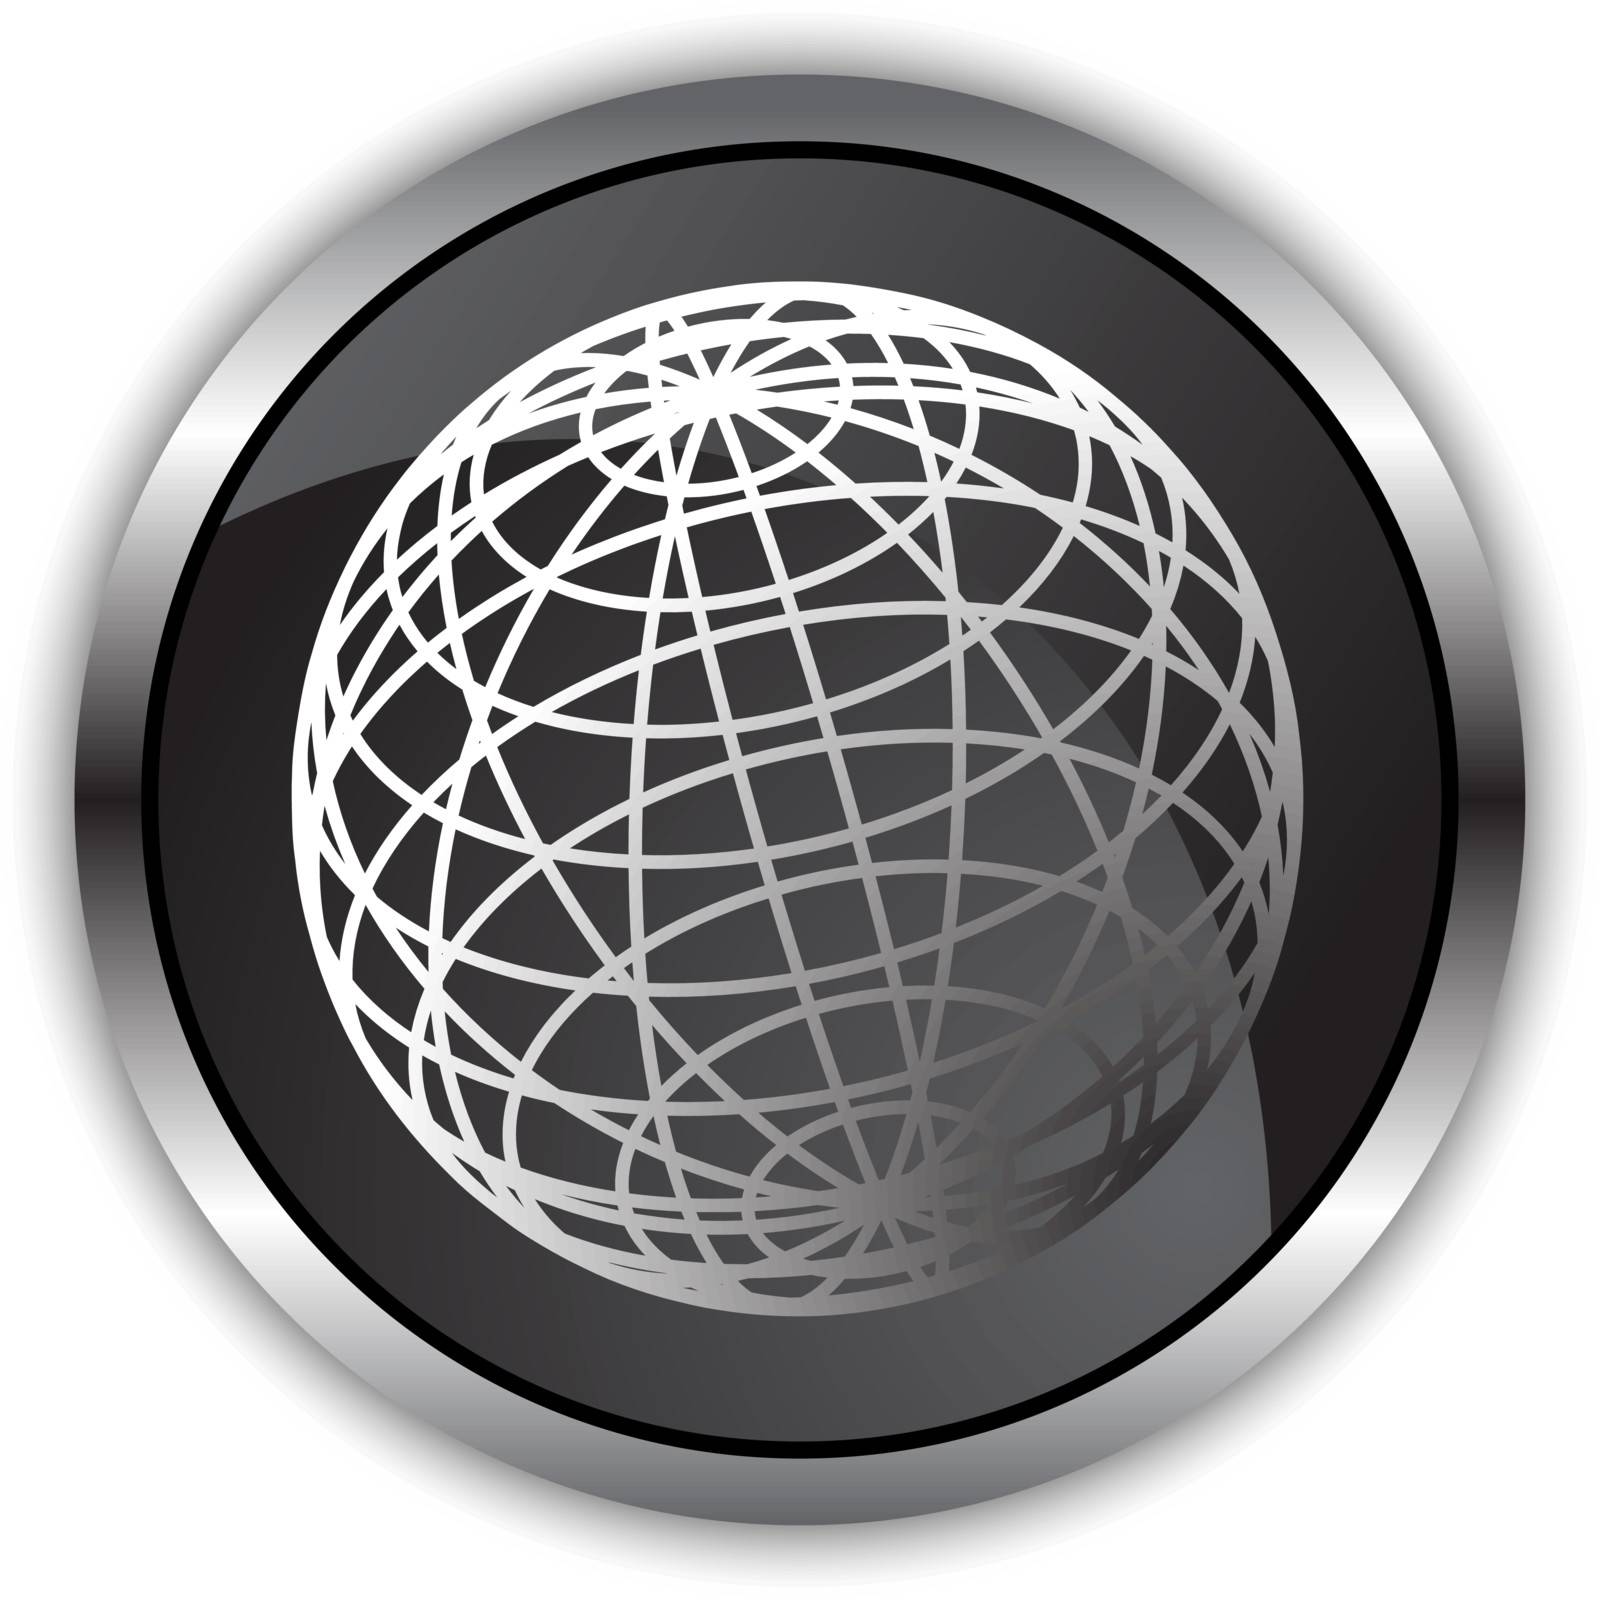 3D globe button - black satin.